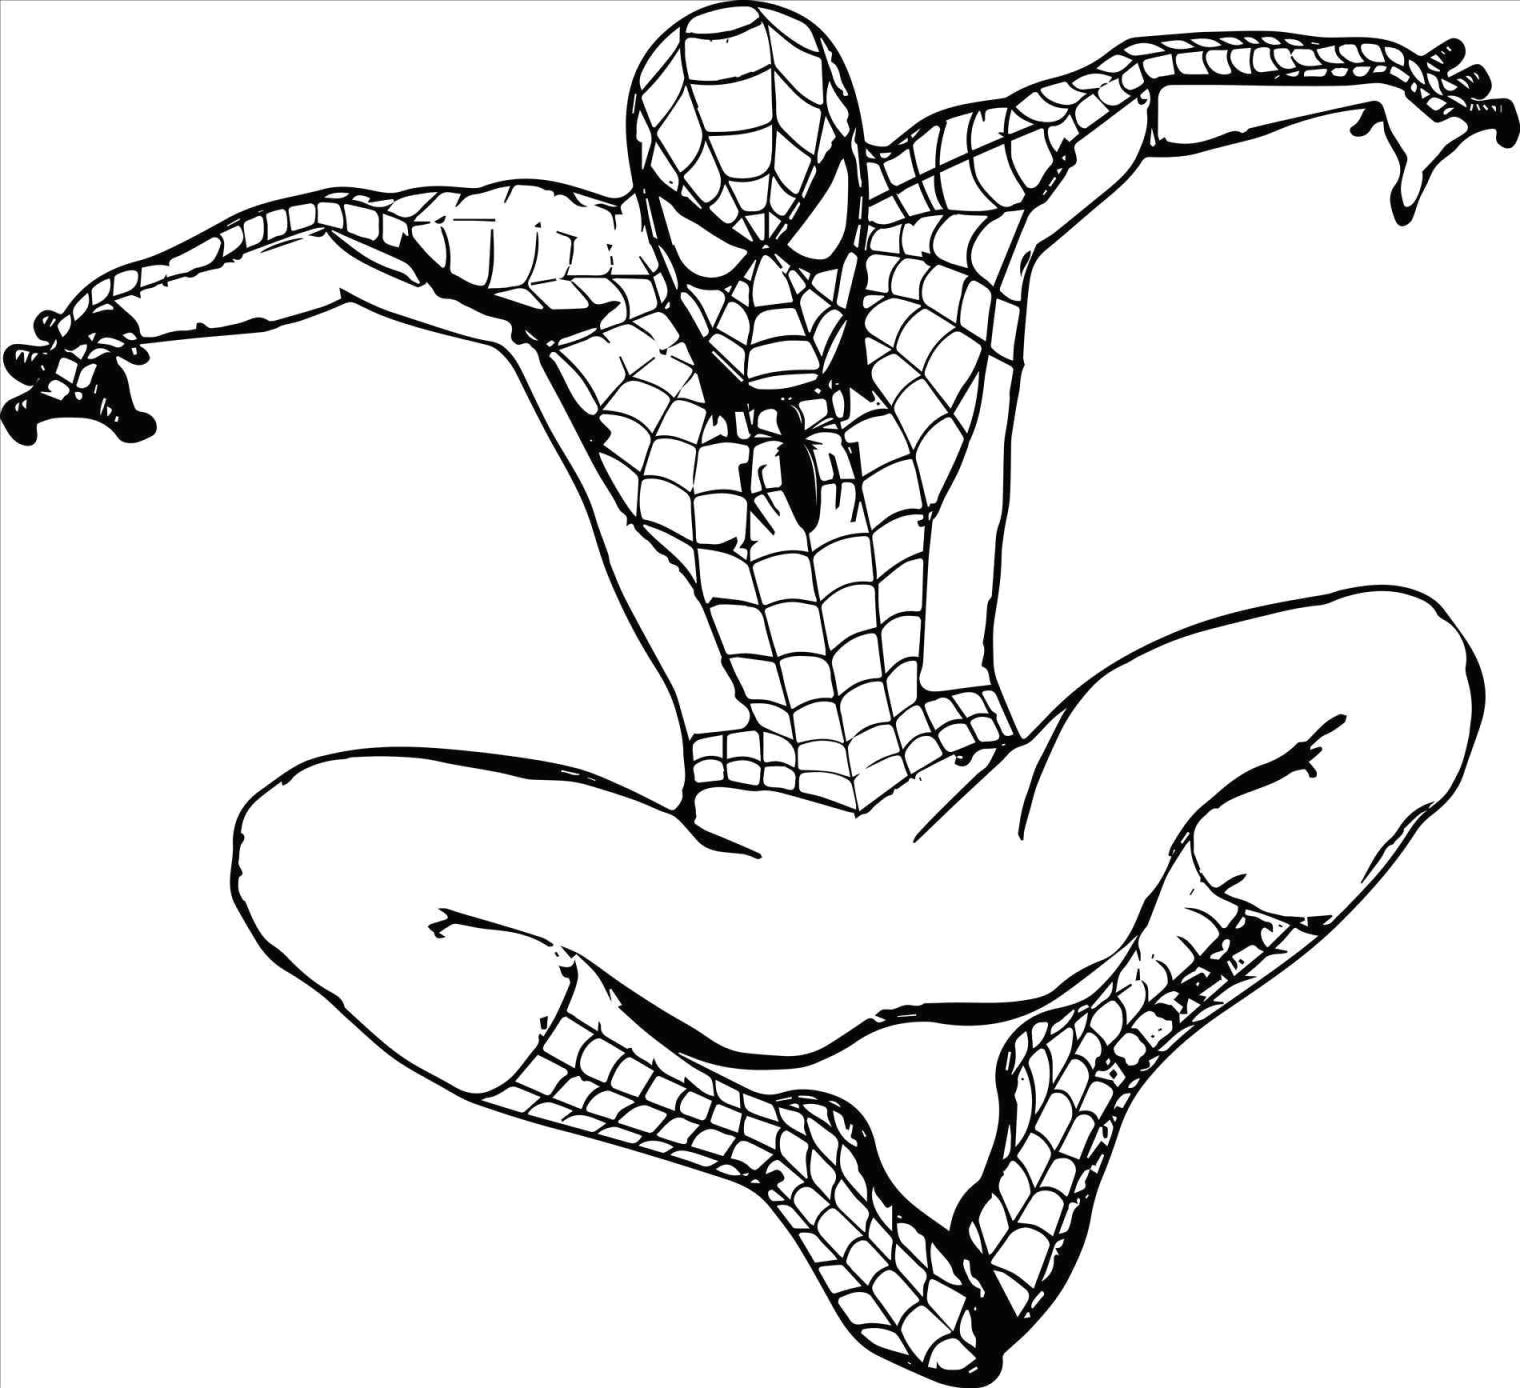 Amazing Spider Man 2 Drawing Easy top How to Draw Amazing Cm 89 Progremulfocathy